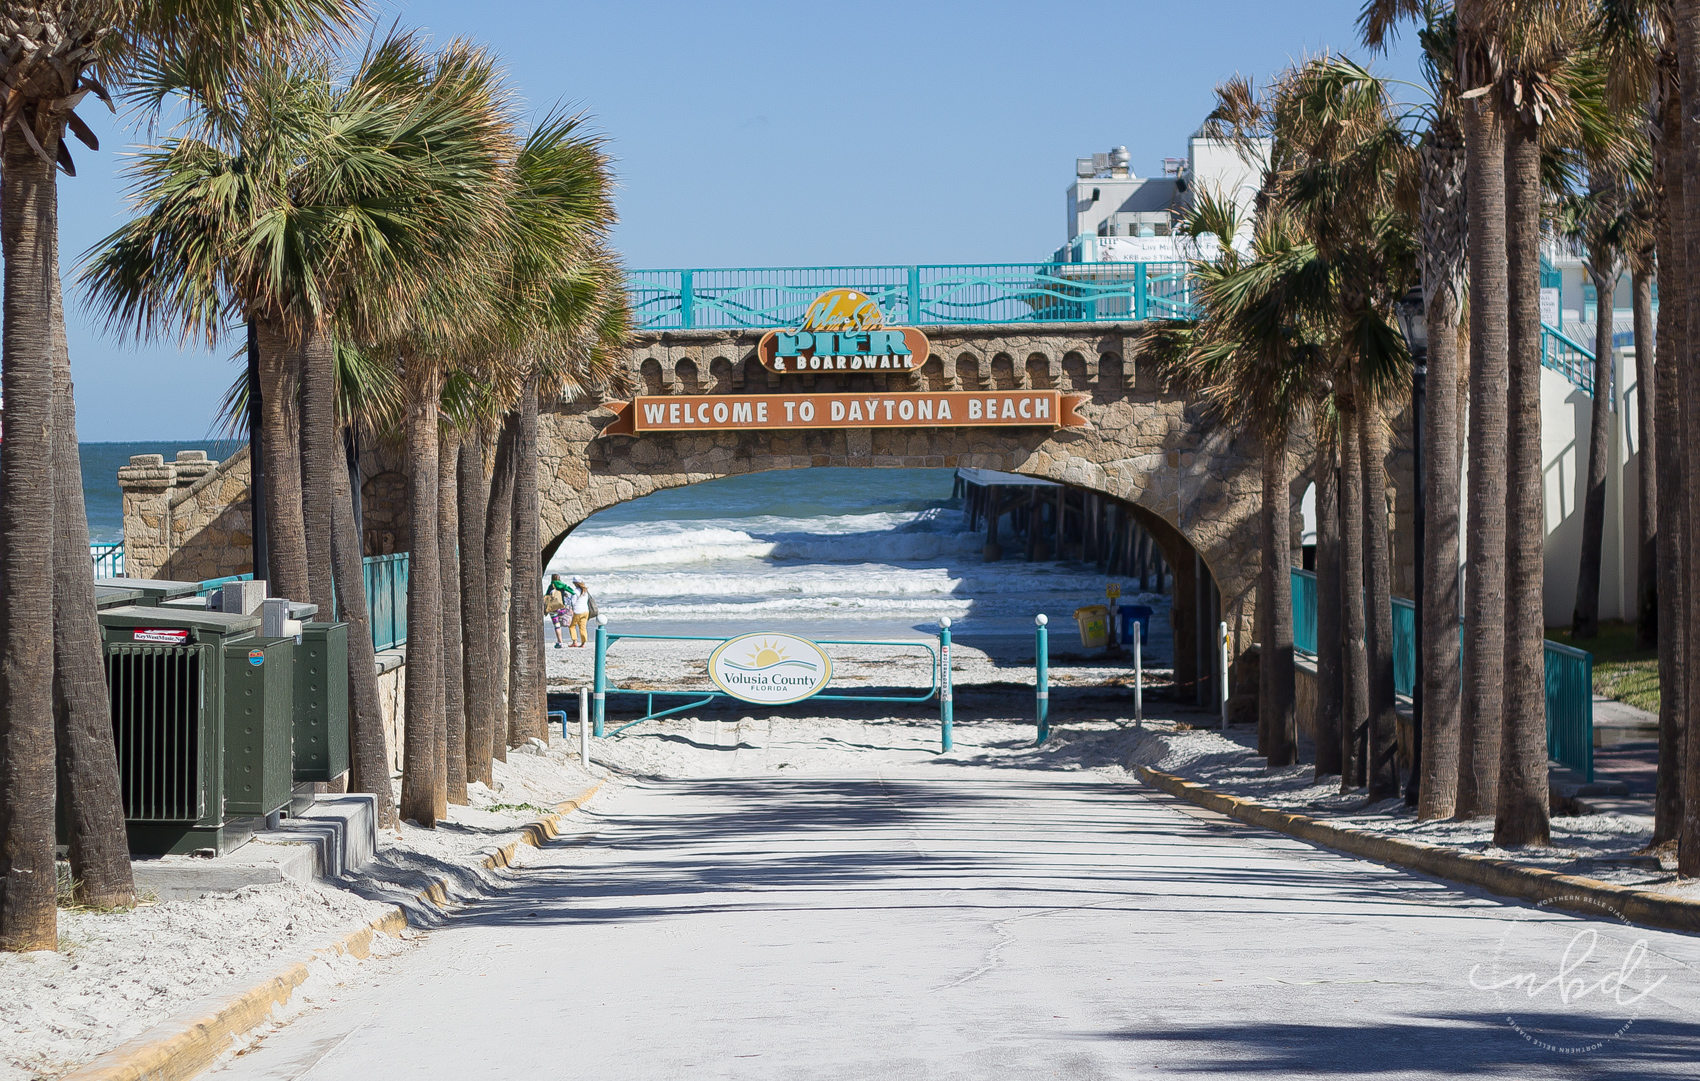 Main Street Pier & Boardwalk welcome sign - Daytona Beach